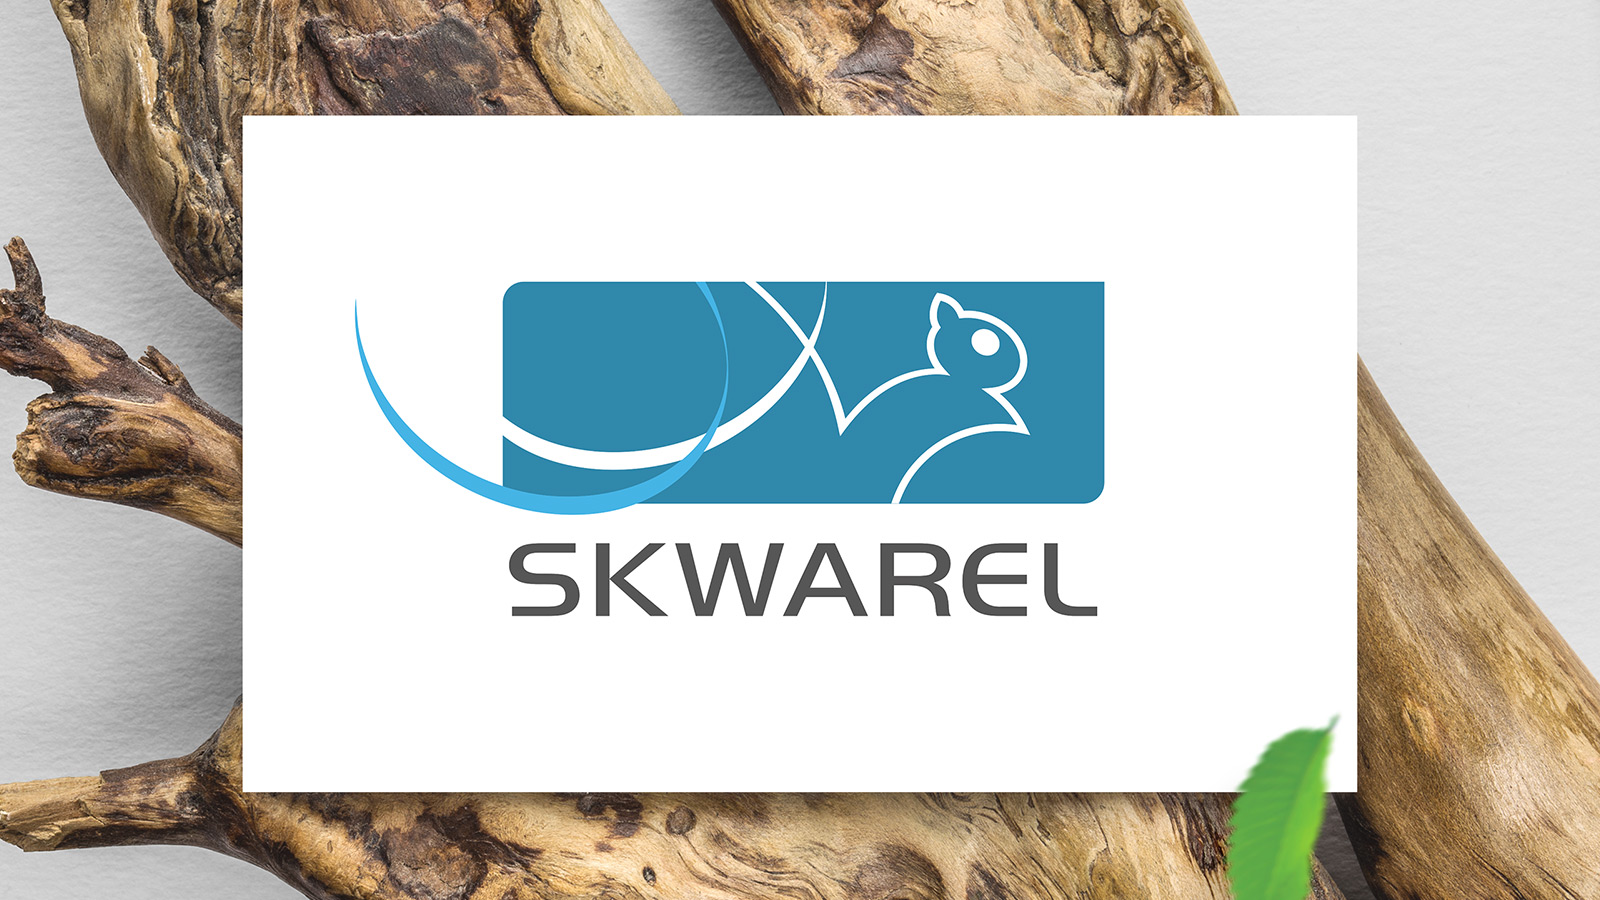 Skwarel logo and printable documents